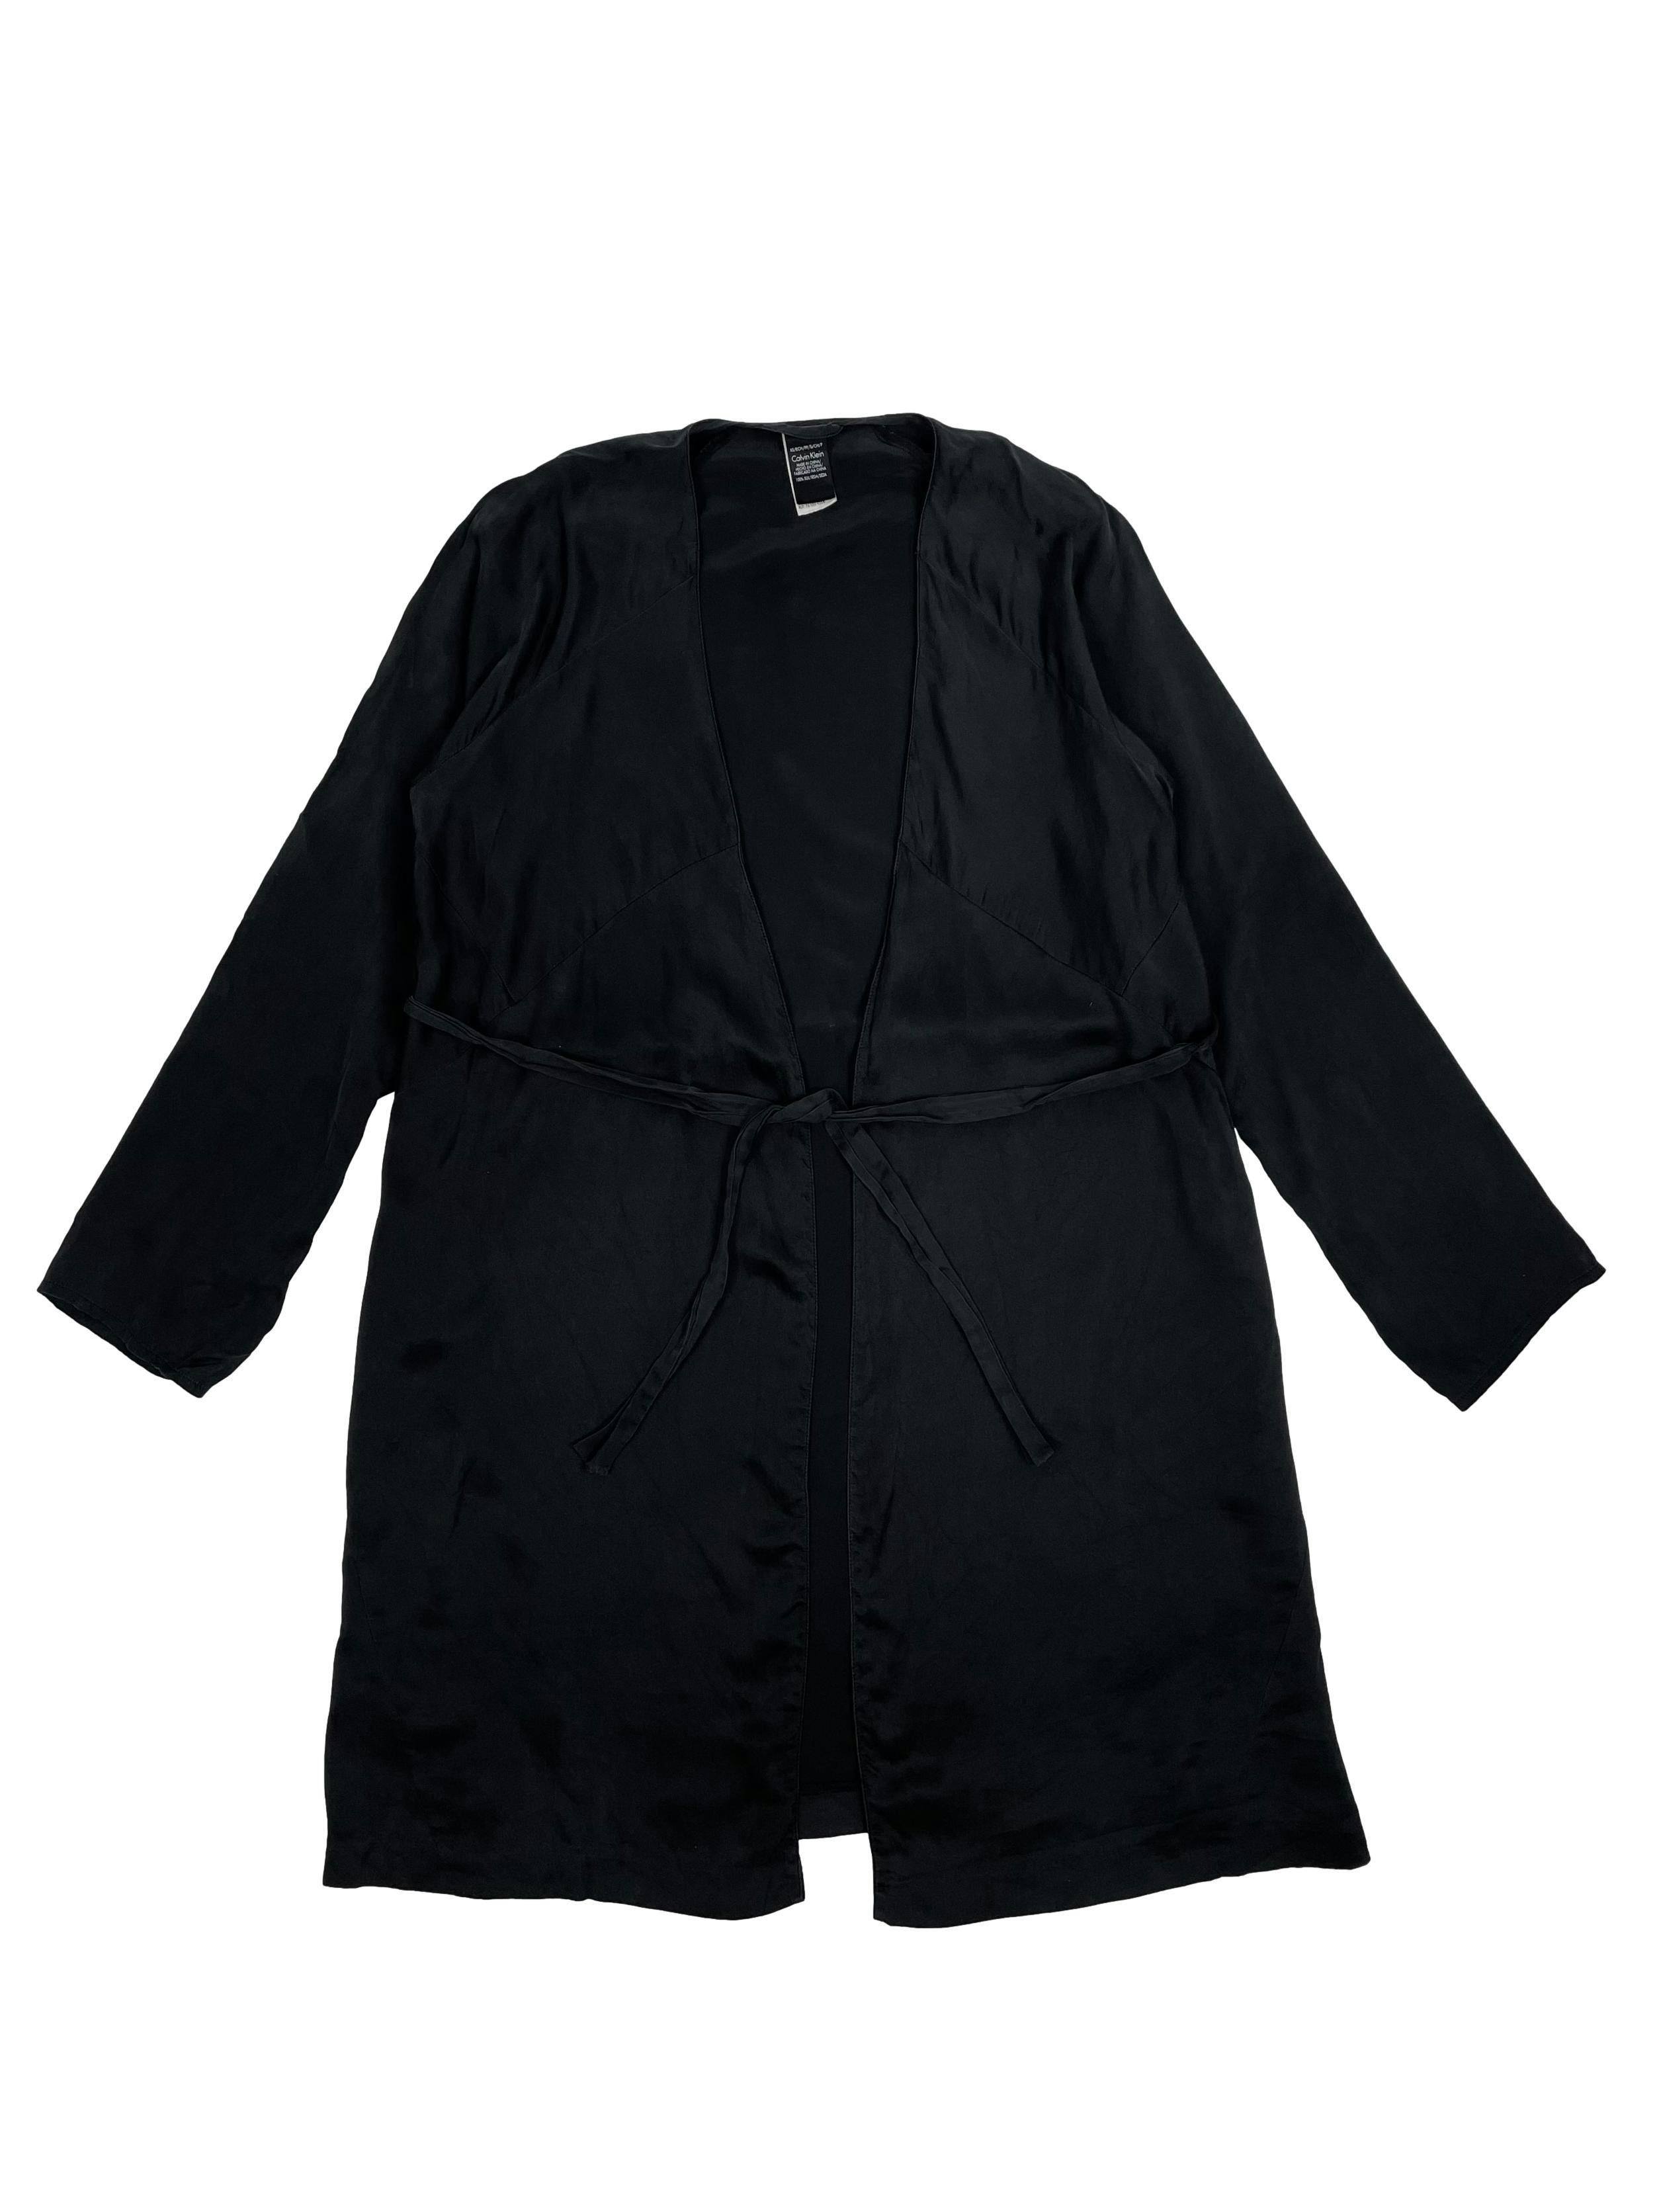 Bata Calvin Klein negra 100% seda con cinto para amarrar en cintura. Precio original S/550. Busto 100cm, Largo 98cm.